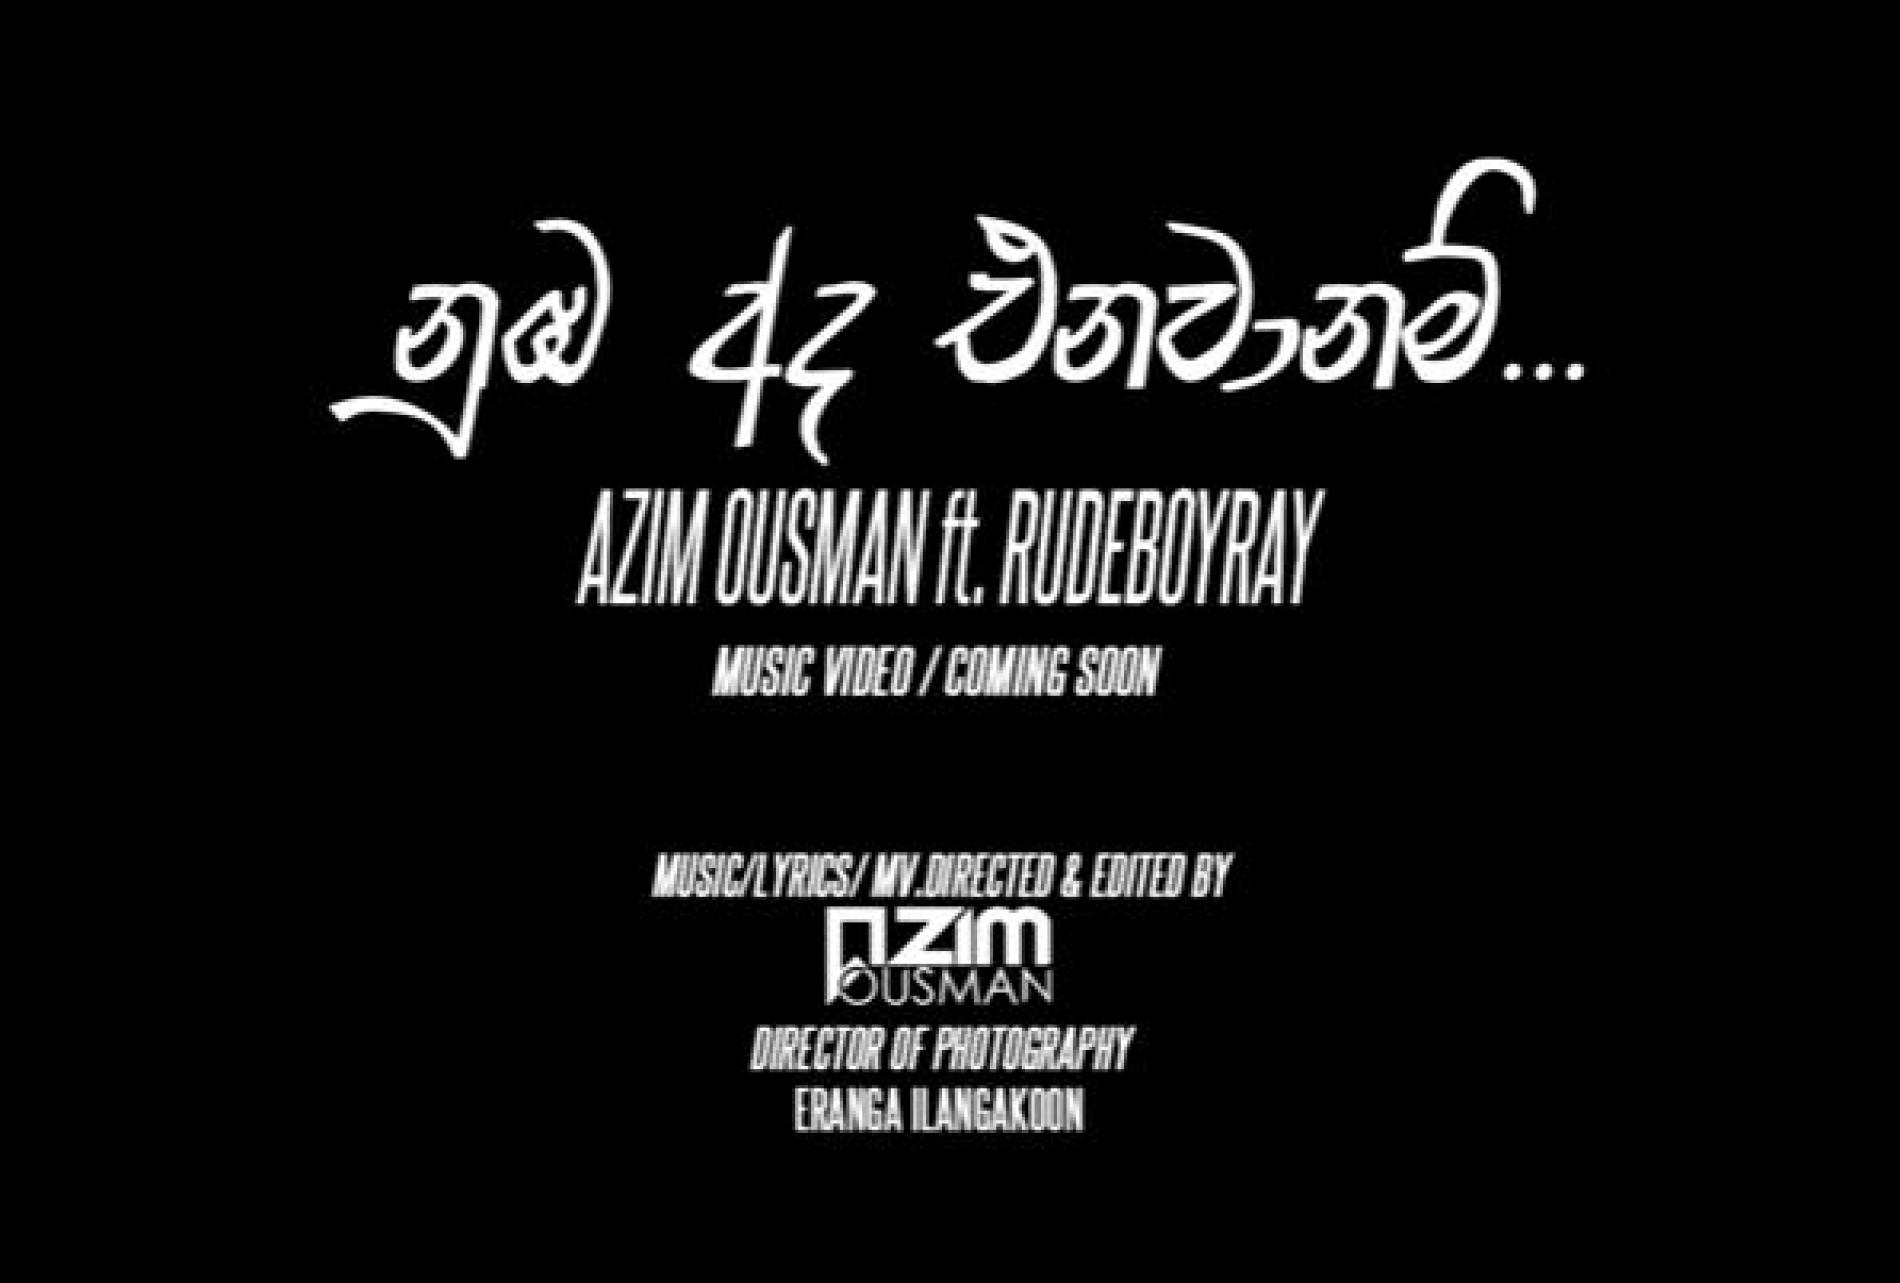 Azim Ousman, Rude Boy Ray & Mansa Leòn – Numba Ada Enavaanam (Trailer # 1)